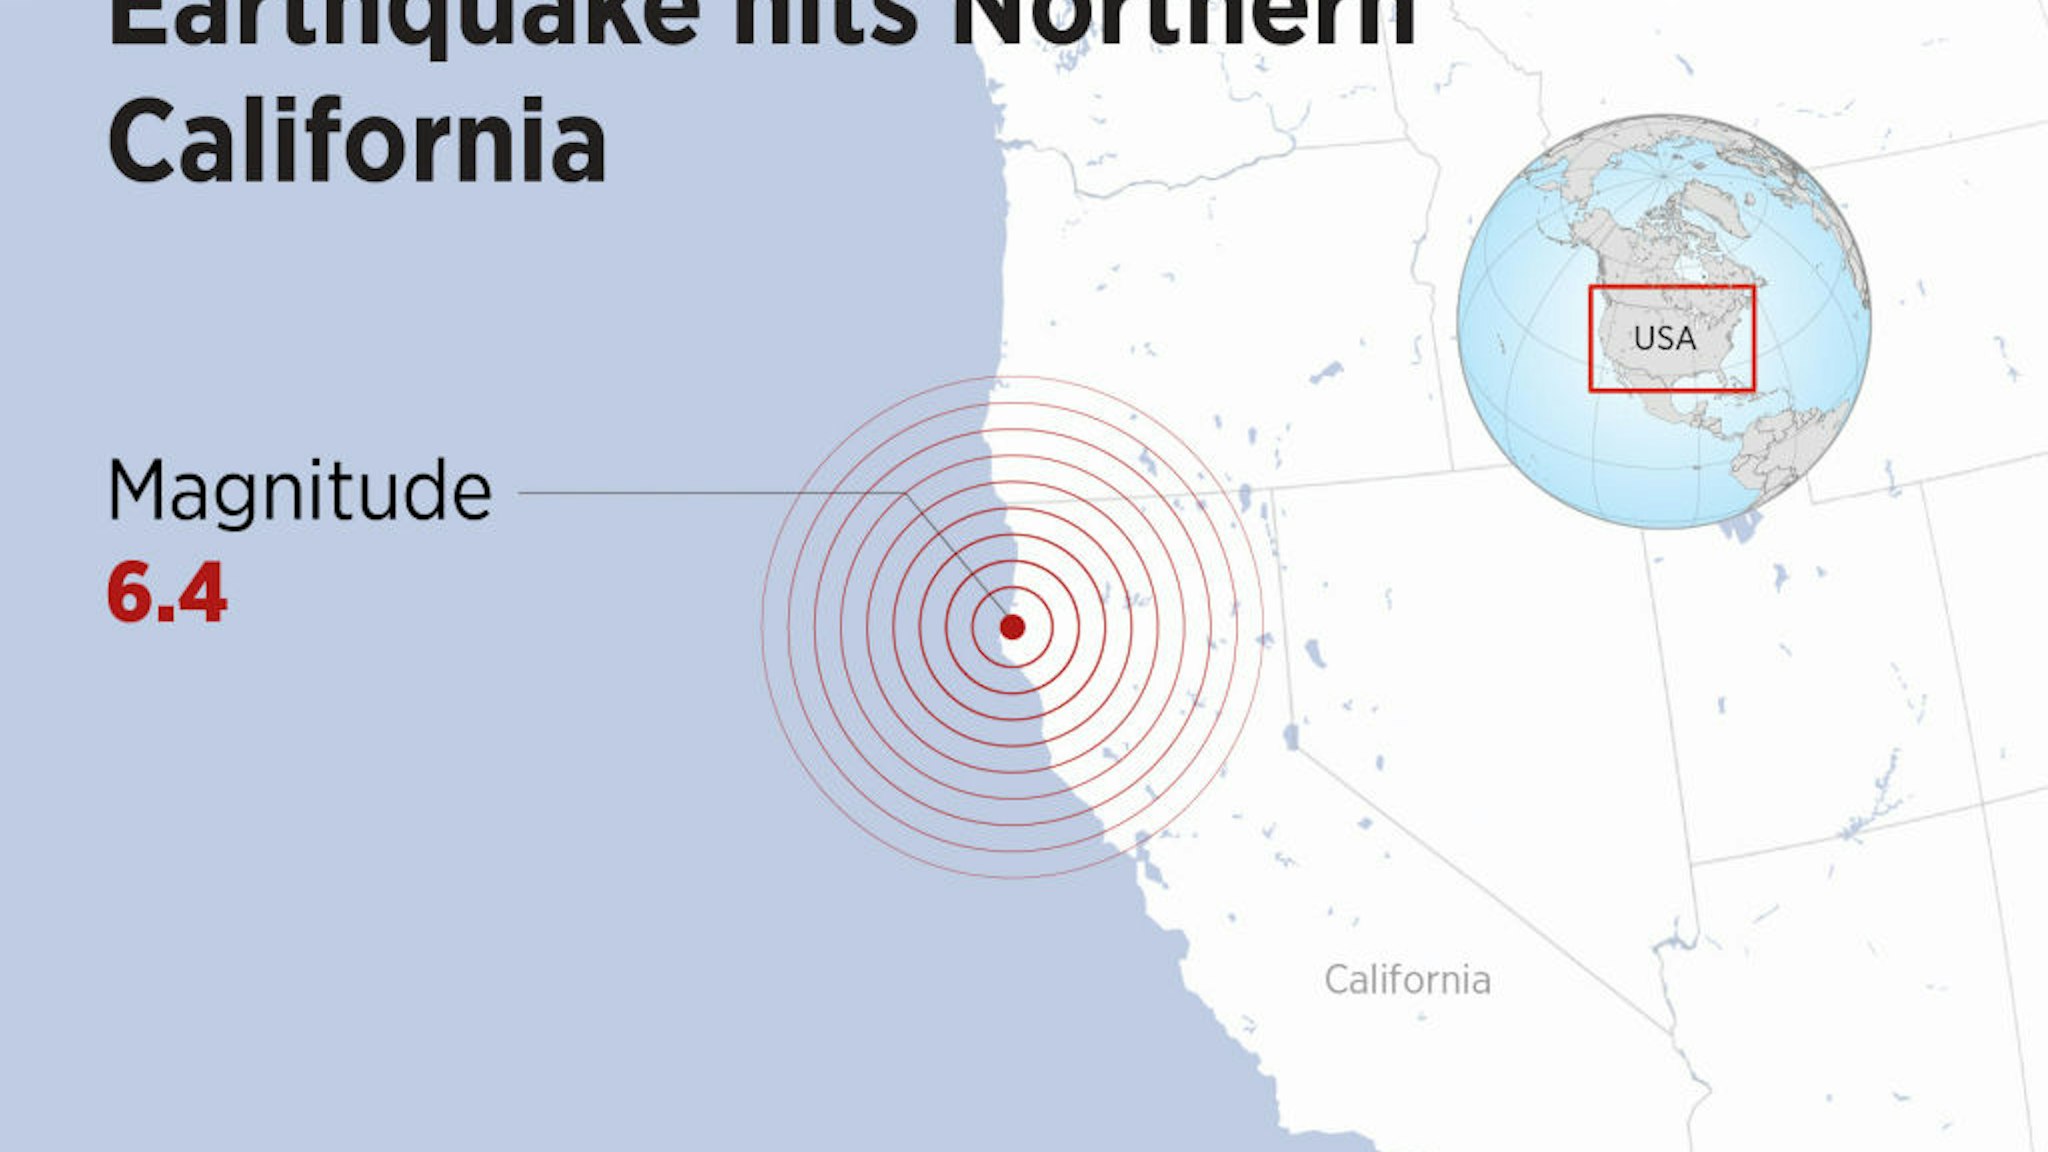 Earthquake hits Northern California